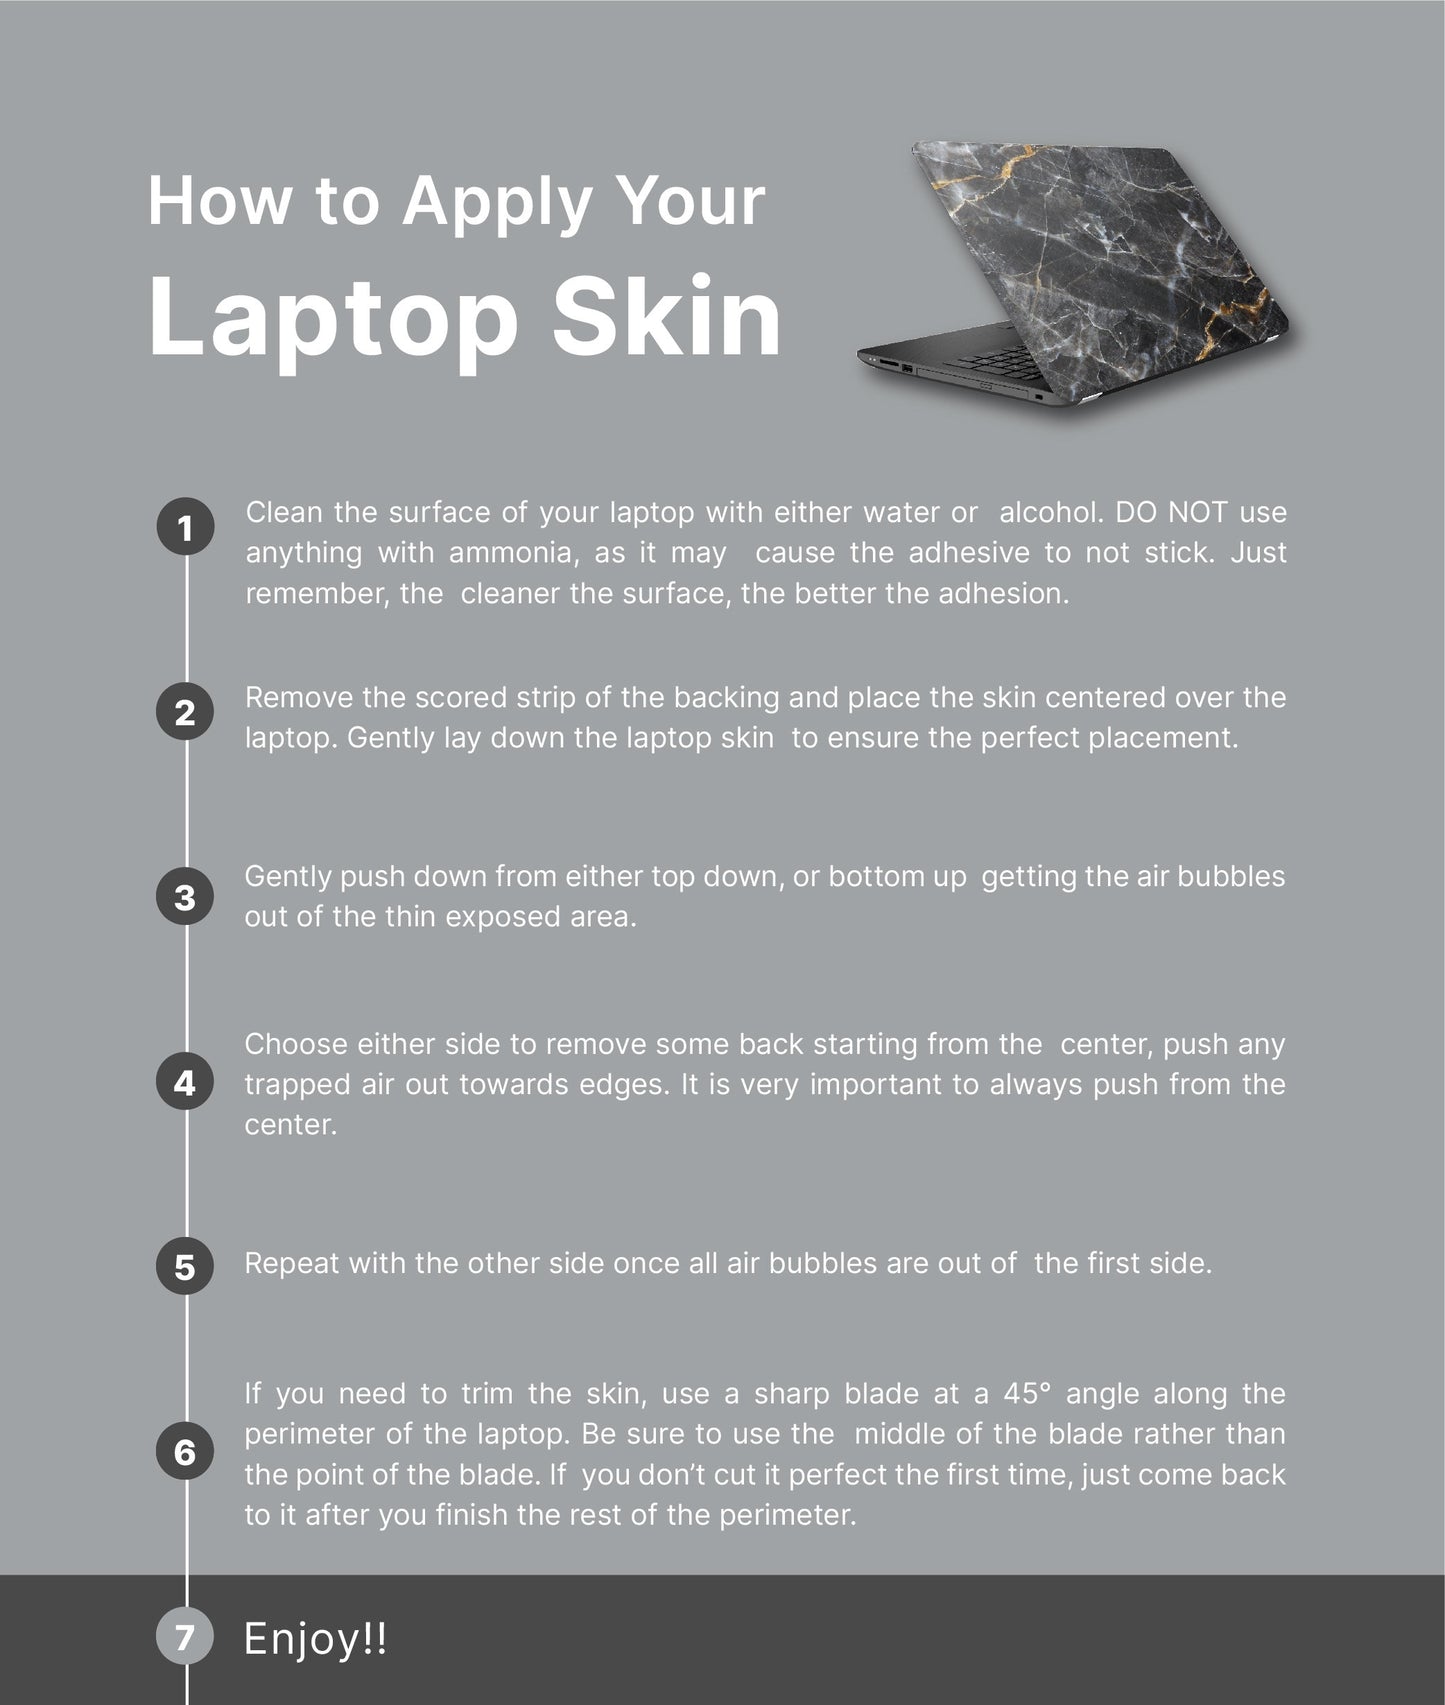 Honeybee Floral Laptop Skin, Laptop Cover, Laptop Skins, Removable Laptop Skins, Laptop Decal, Customized Laptop Skin, Laptop Stickers 227